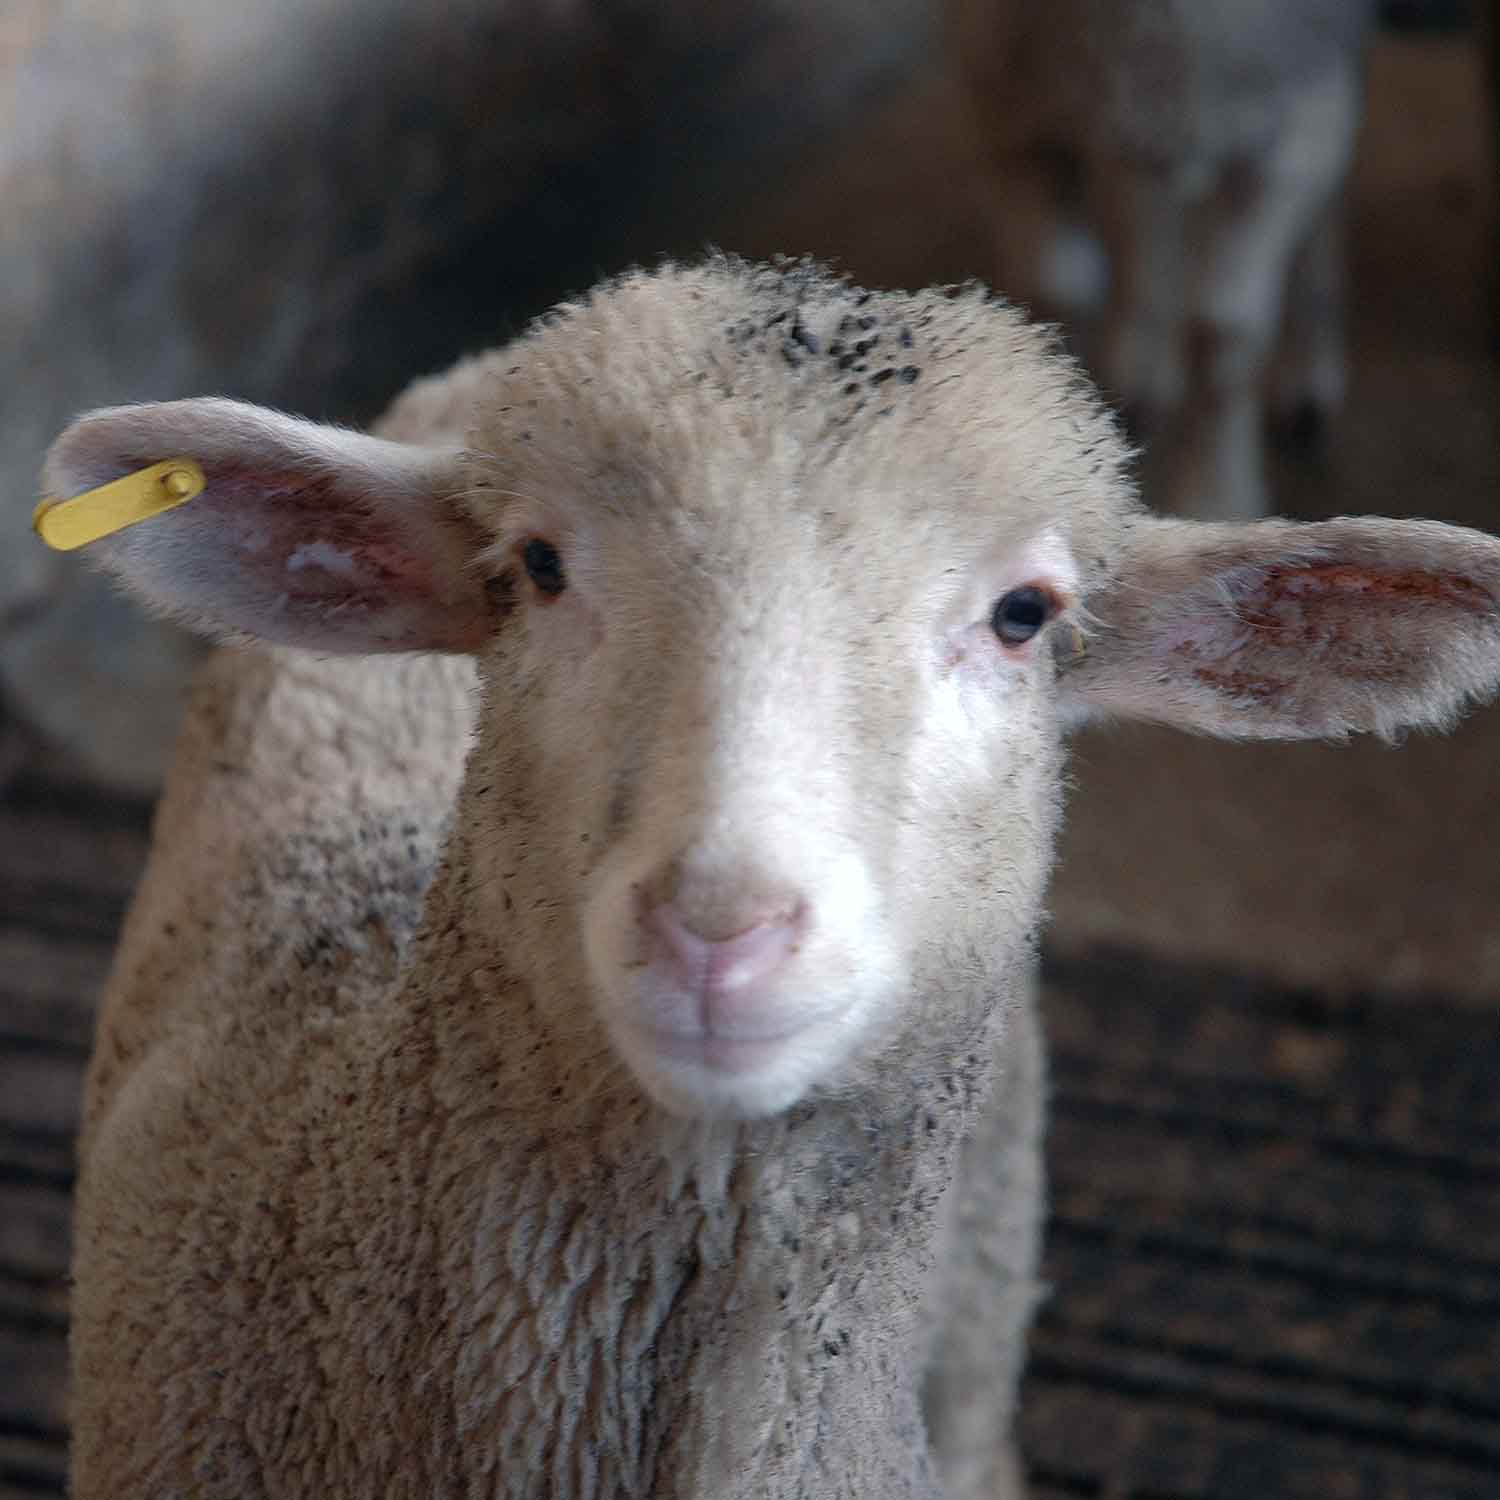 Lamb in a slaughterhouse